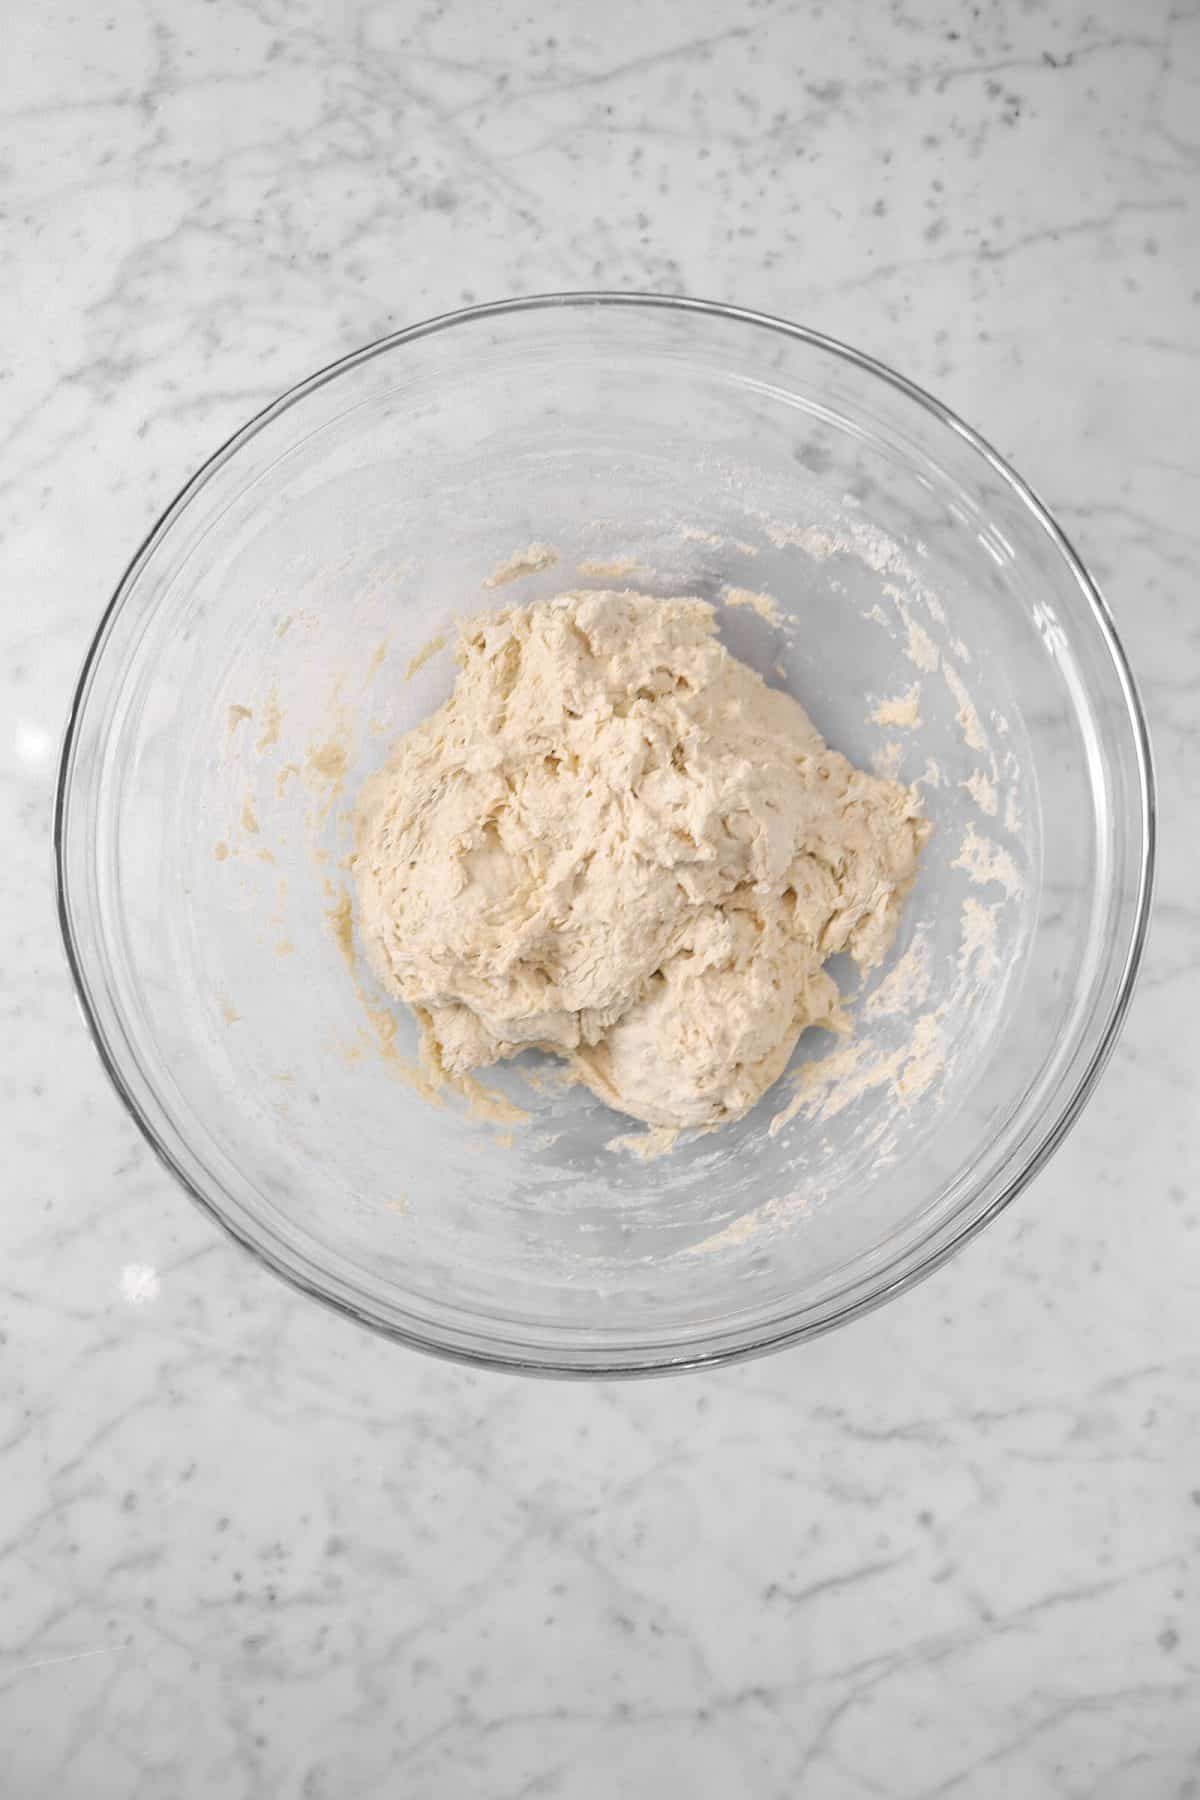 sourdough dough in a glass bowl